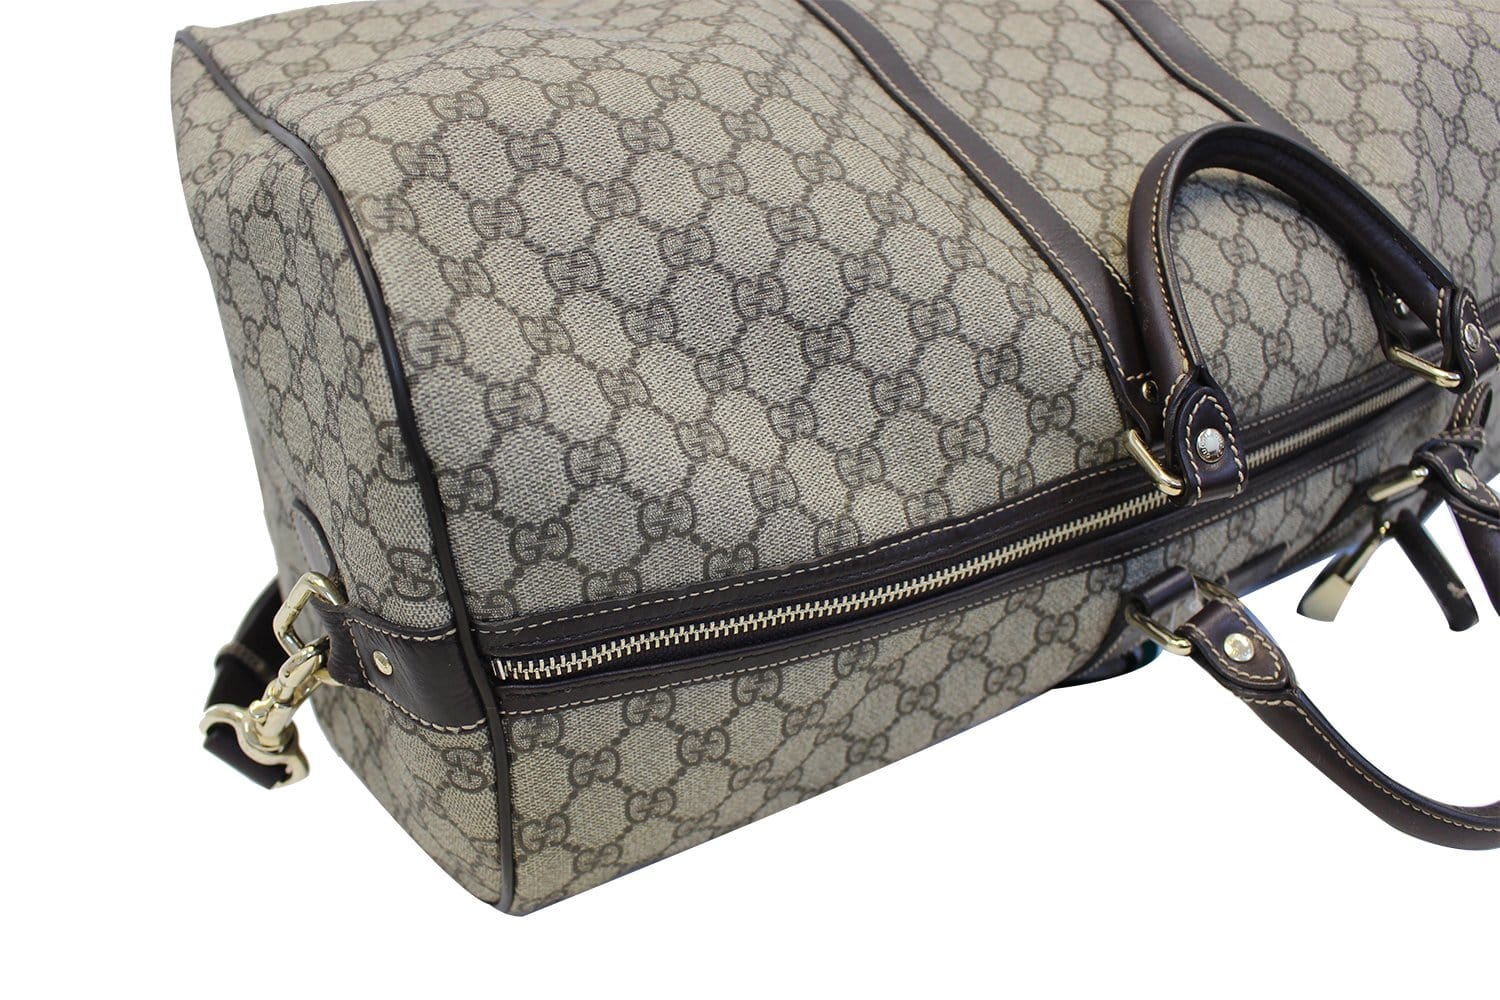 Gucci Duffle Bag With Tonal Double G - Kaialux